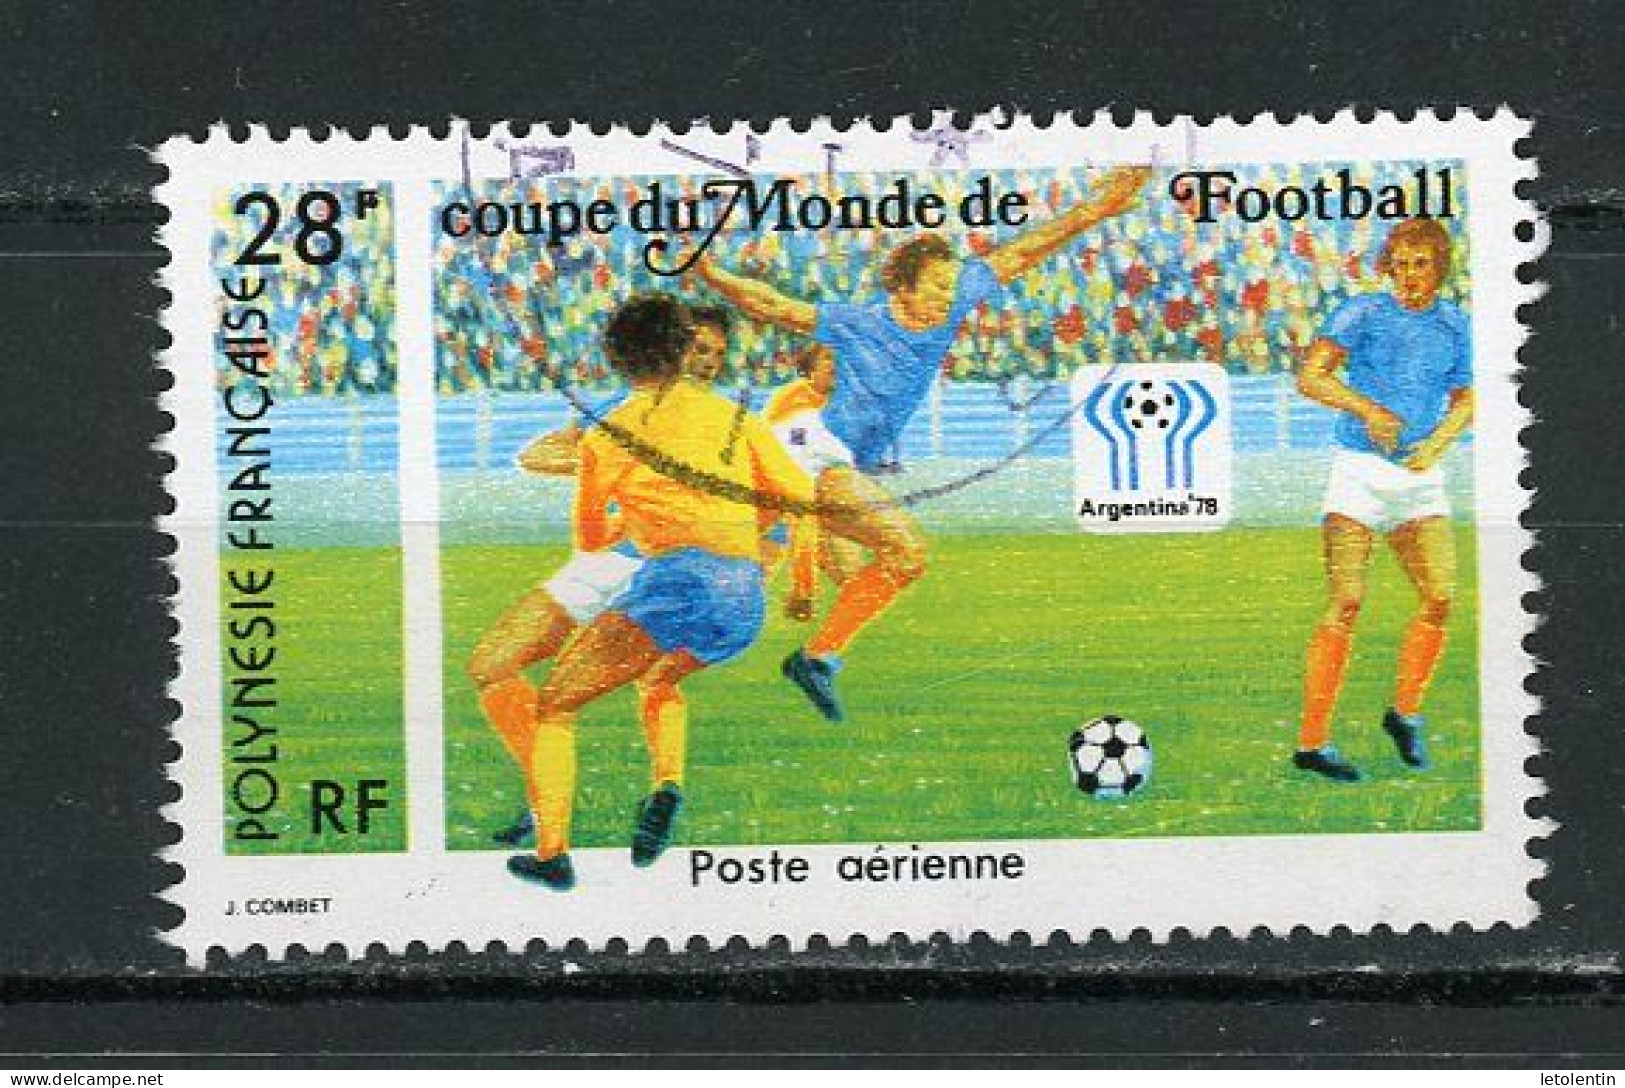 POLYNESIE - FOOT-BALL - POSTE AERIENNE - N° Yt 137 Obli. - Used Stamps